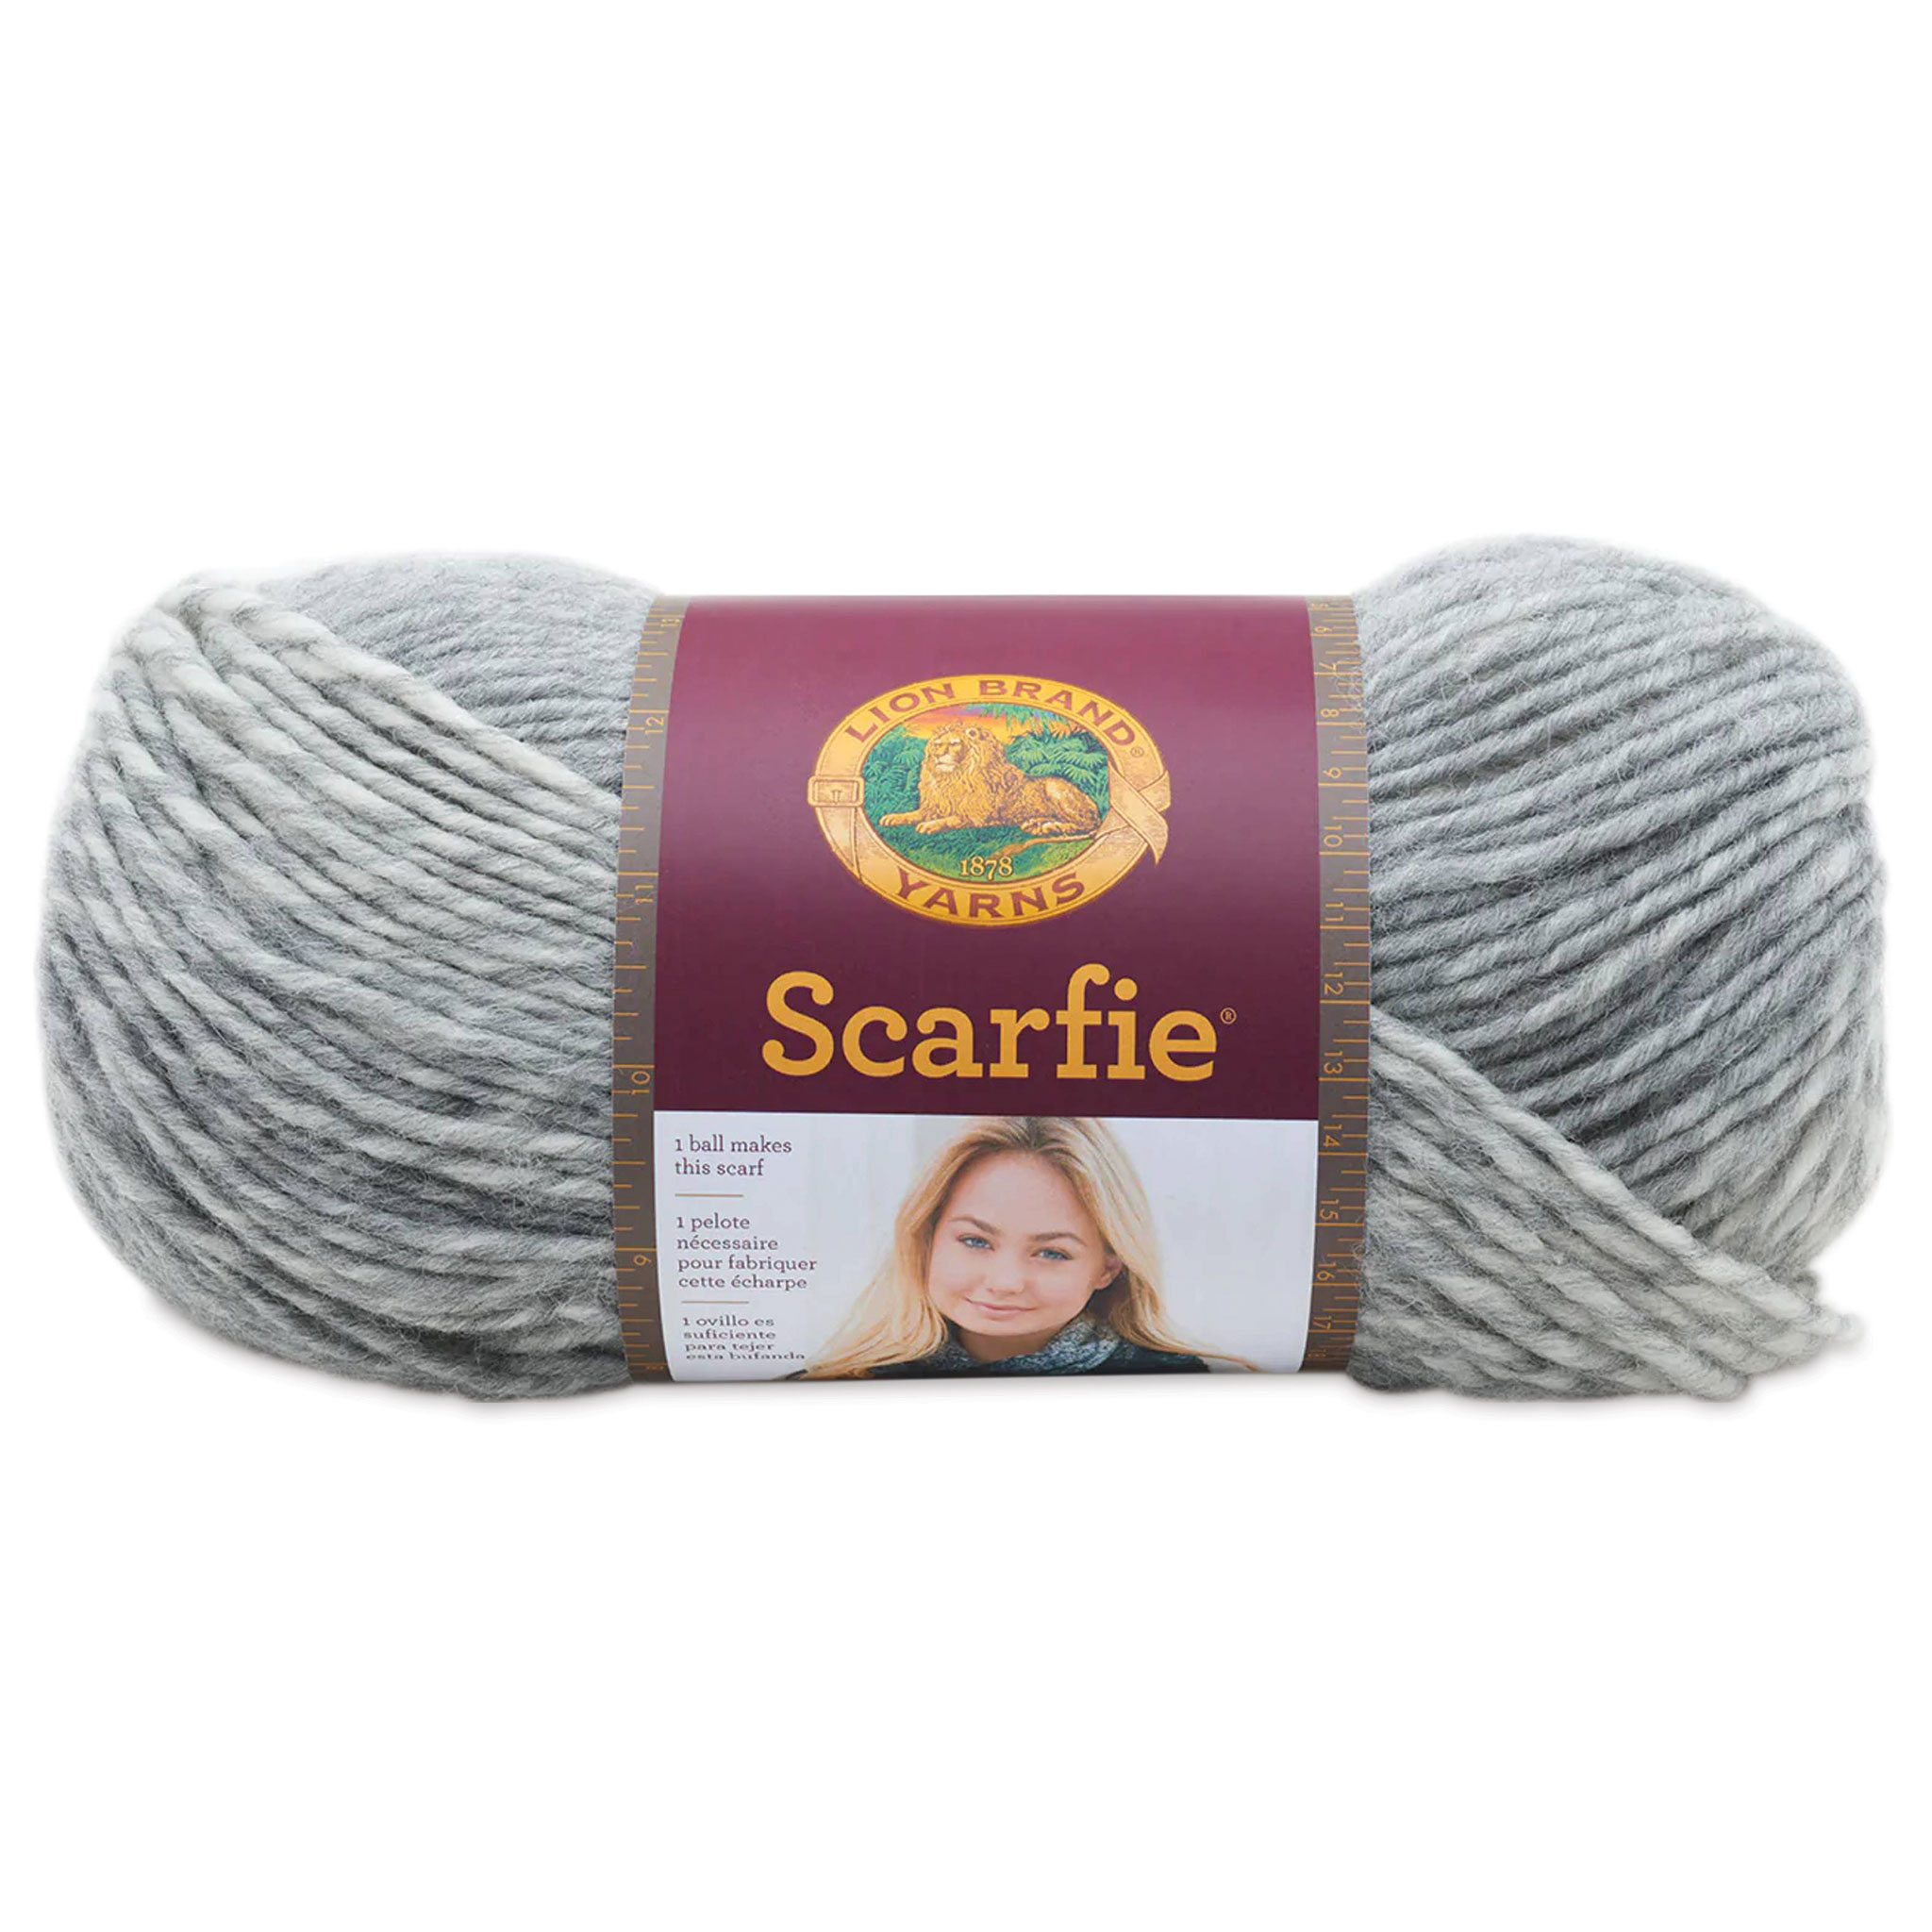 scarfie-yarn-lion-brand-cranberry-black